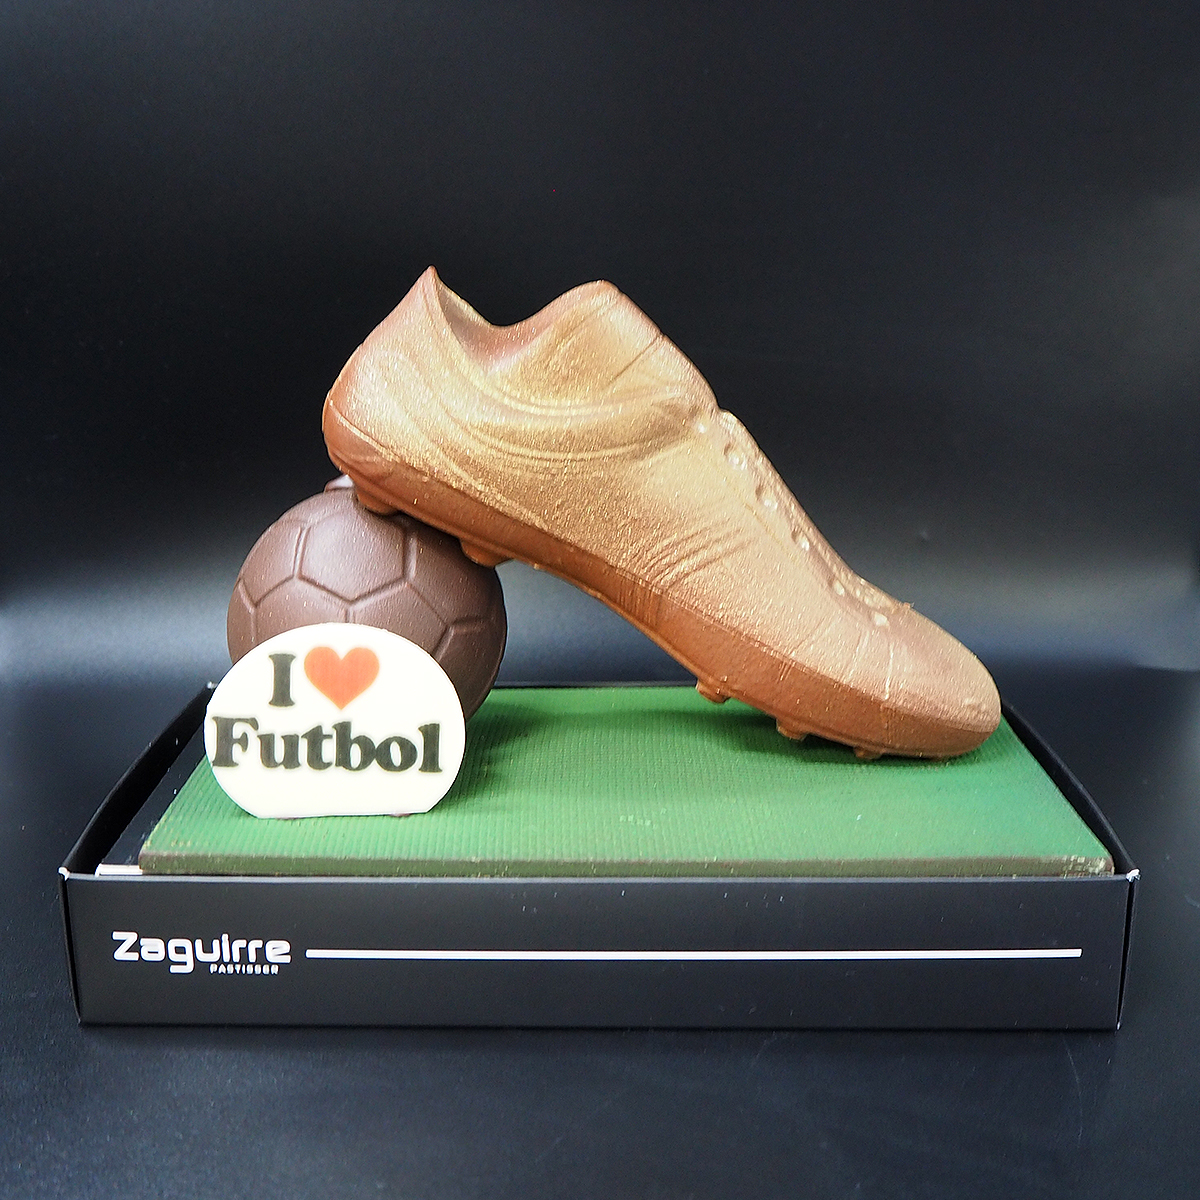 Mona de Pasqua de xocolata de fútbol elaborada per Zaguirre Pastisser